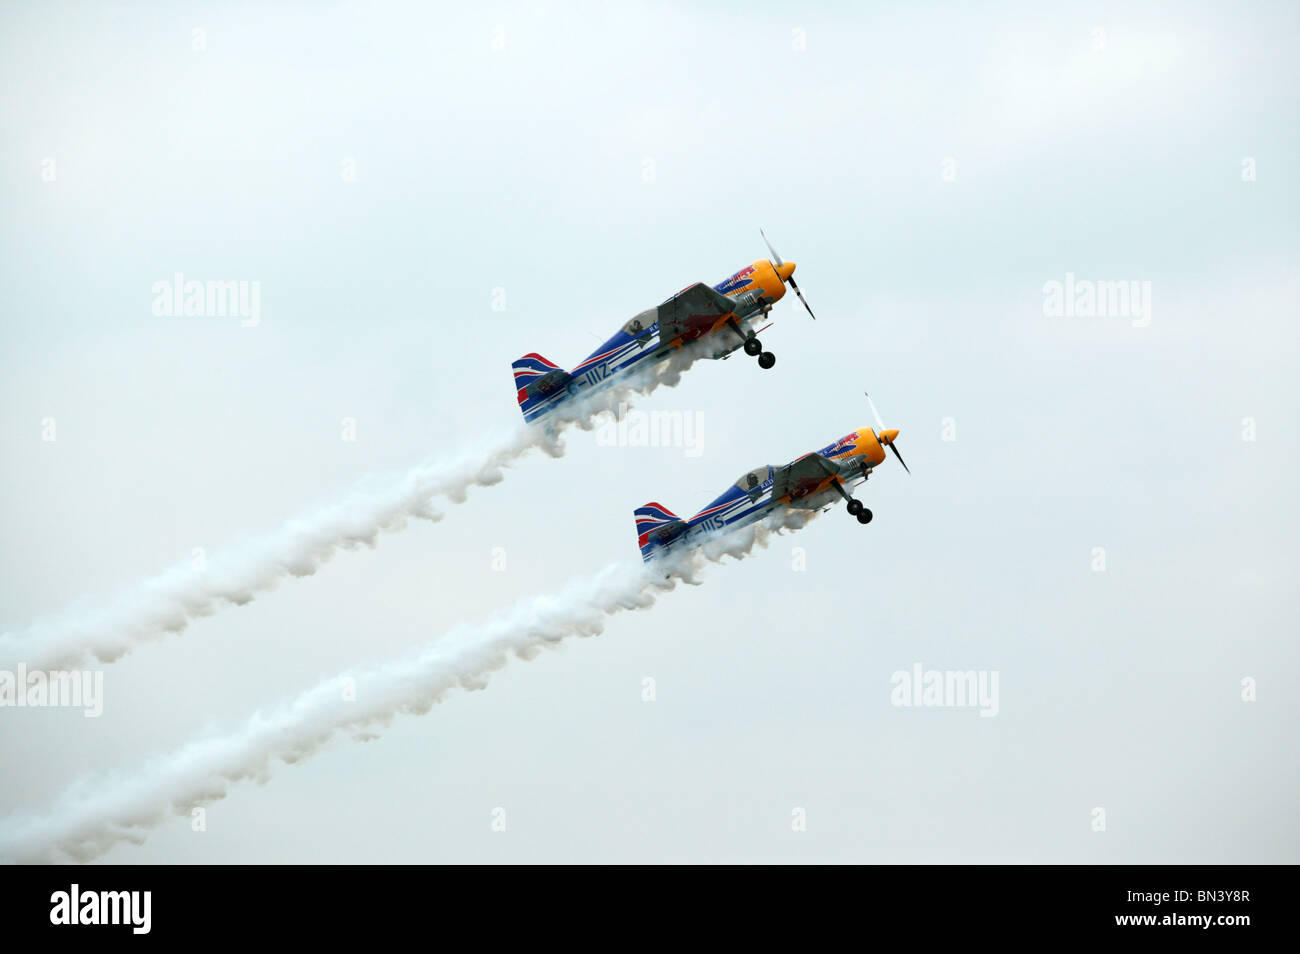 The Red Bull Matadors team preparing to start their aerobatic display at the Biggin Hill Air Show 2010 Stock Photo